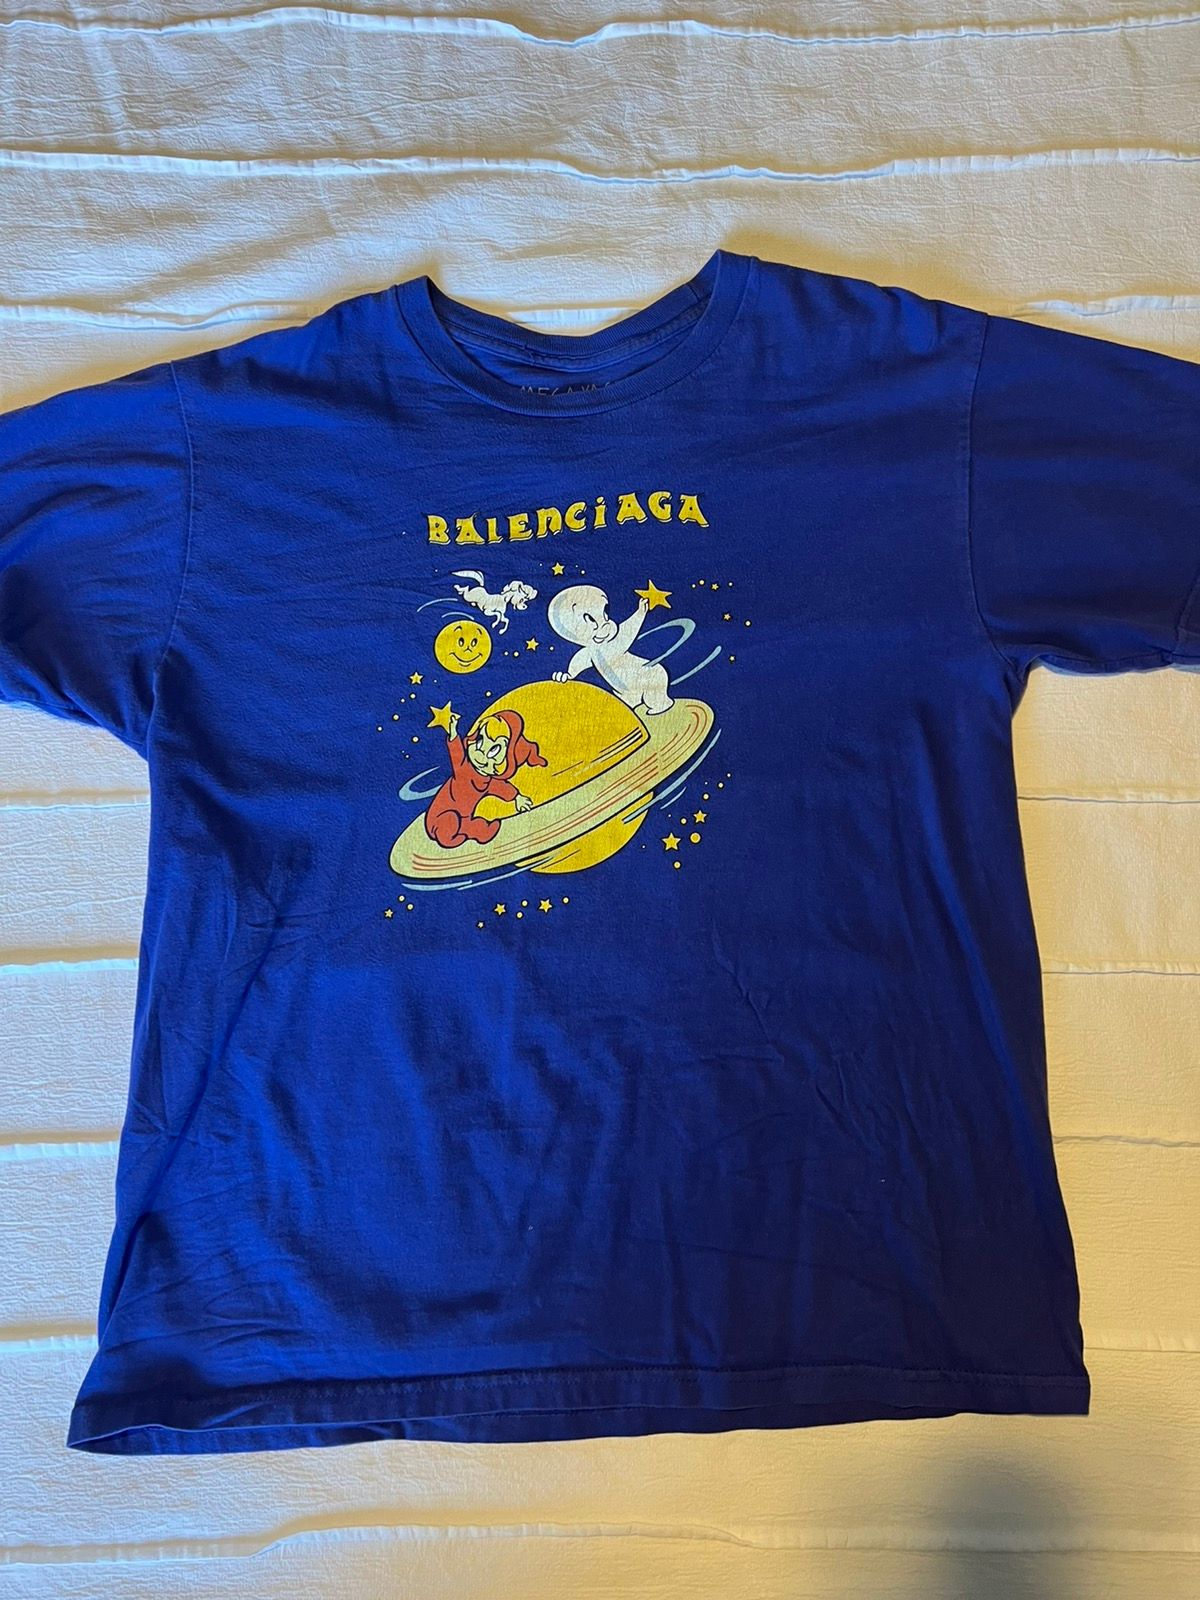 Mega Yacht Balenciaga/Casper the Ghost T-Shirt